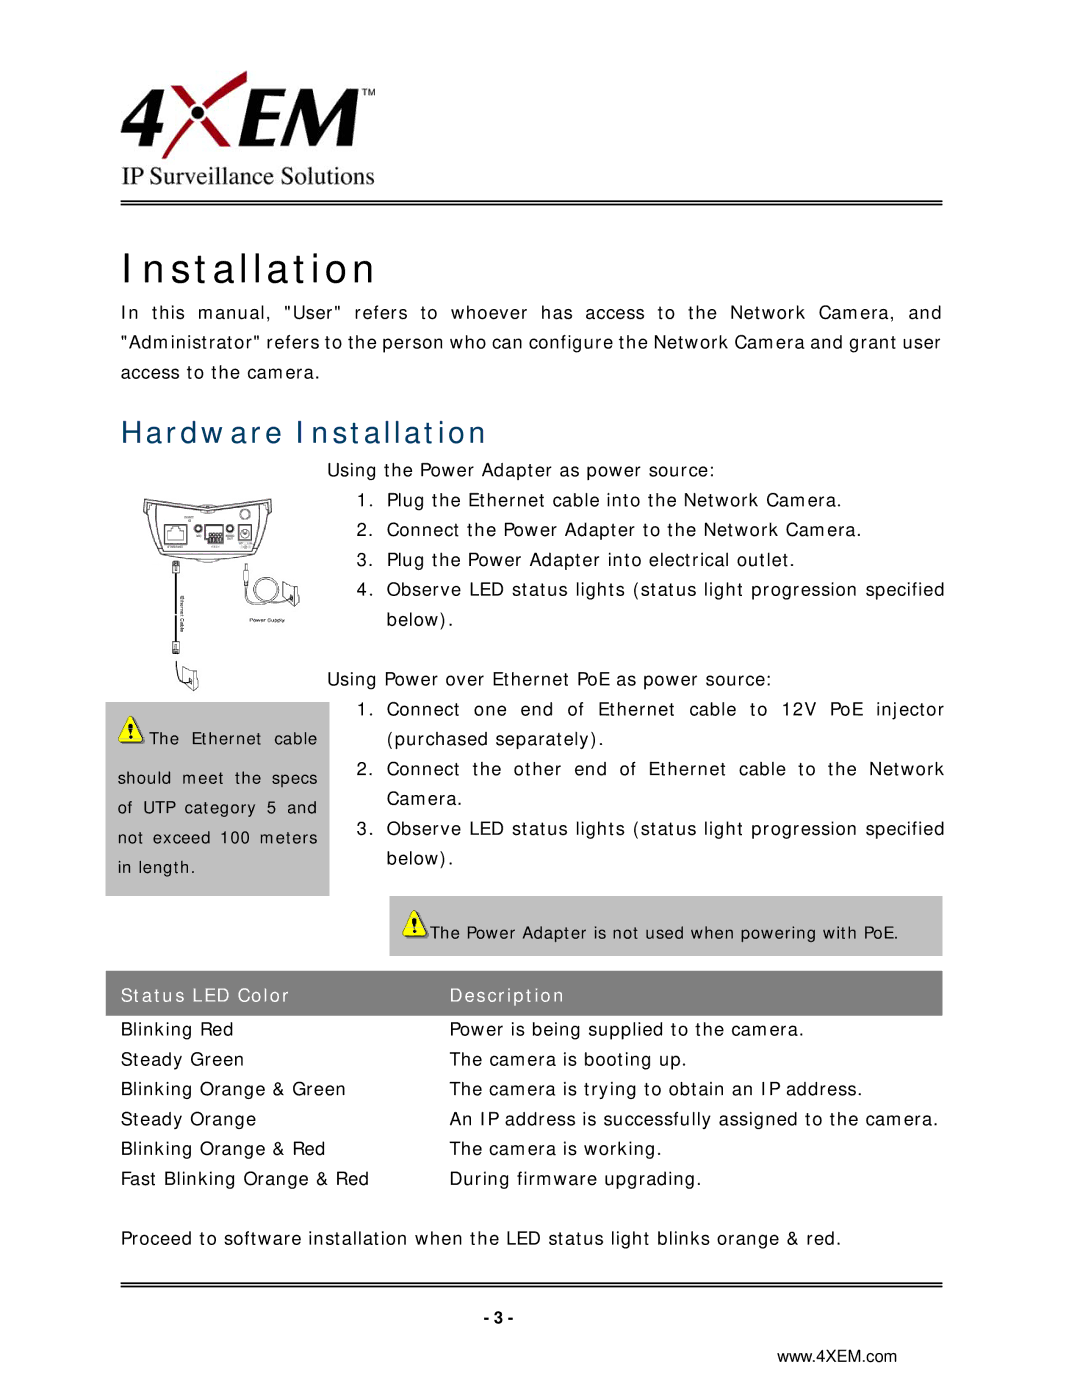 4XEM IPCAMW45 manual Hardware Installation 